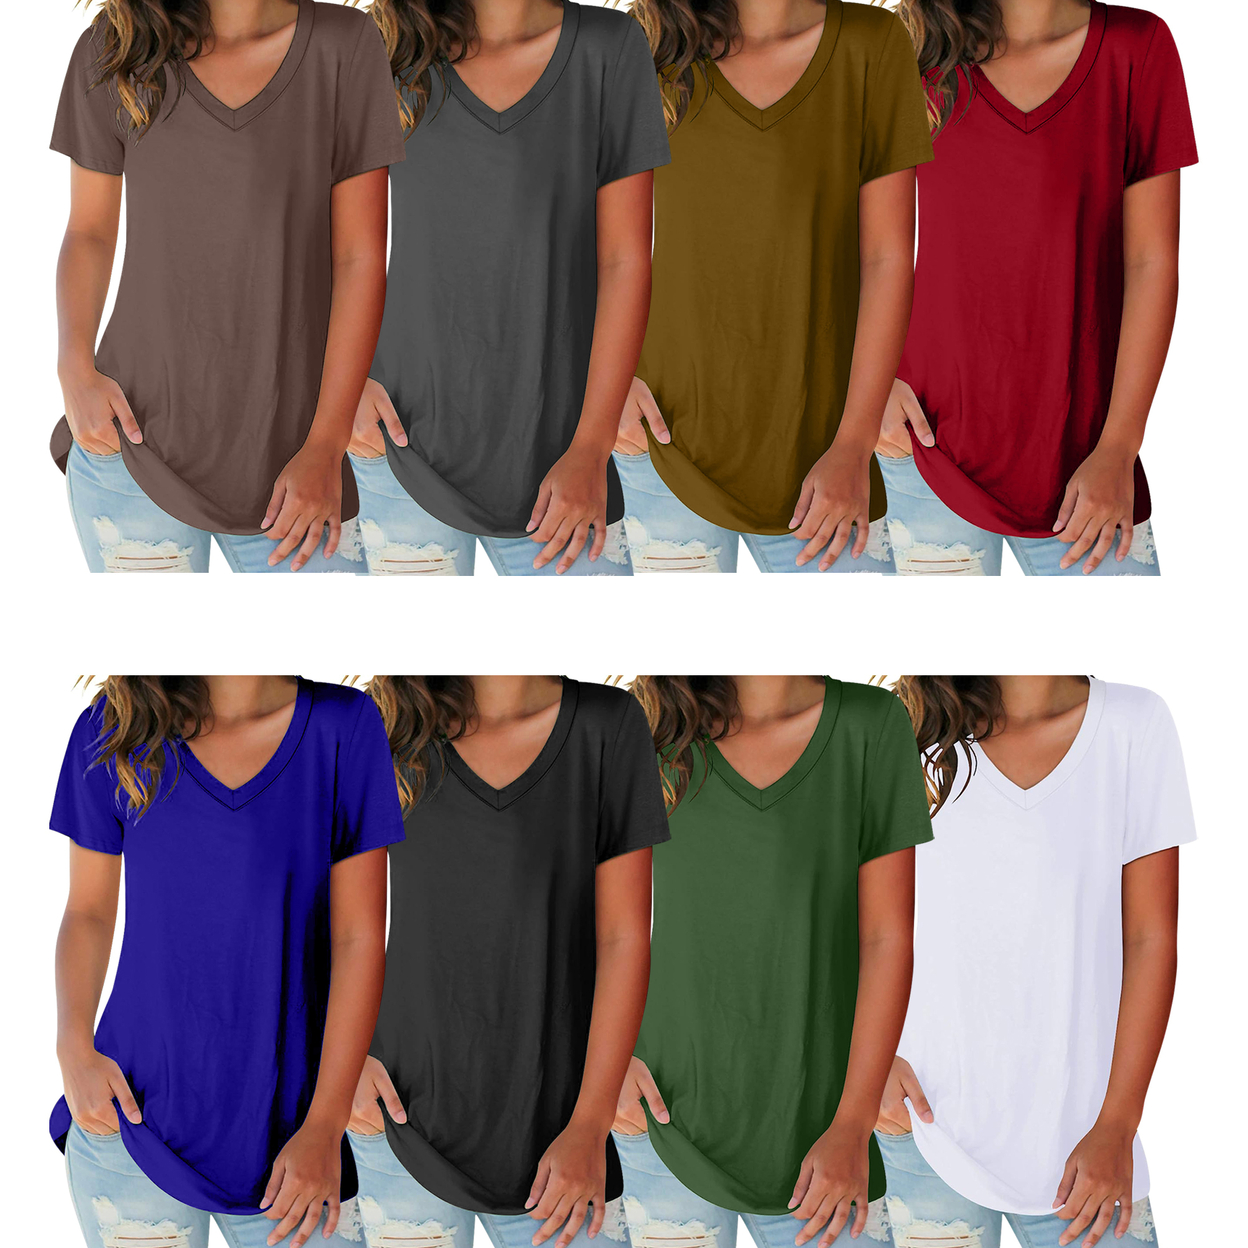 2-Pack: Women's Ultra Soft Smooth Cotton Blend Basic V-Neck Short Sleeve Shirts - White & Green, Large